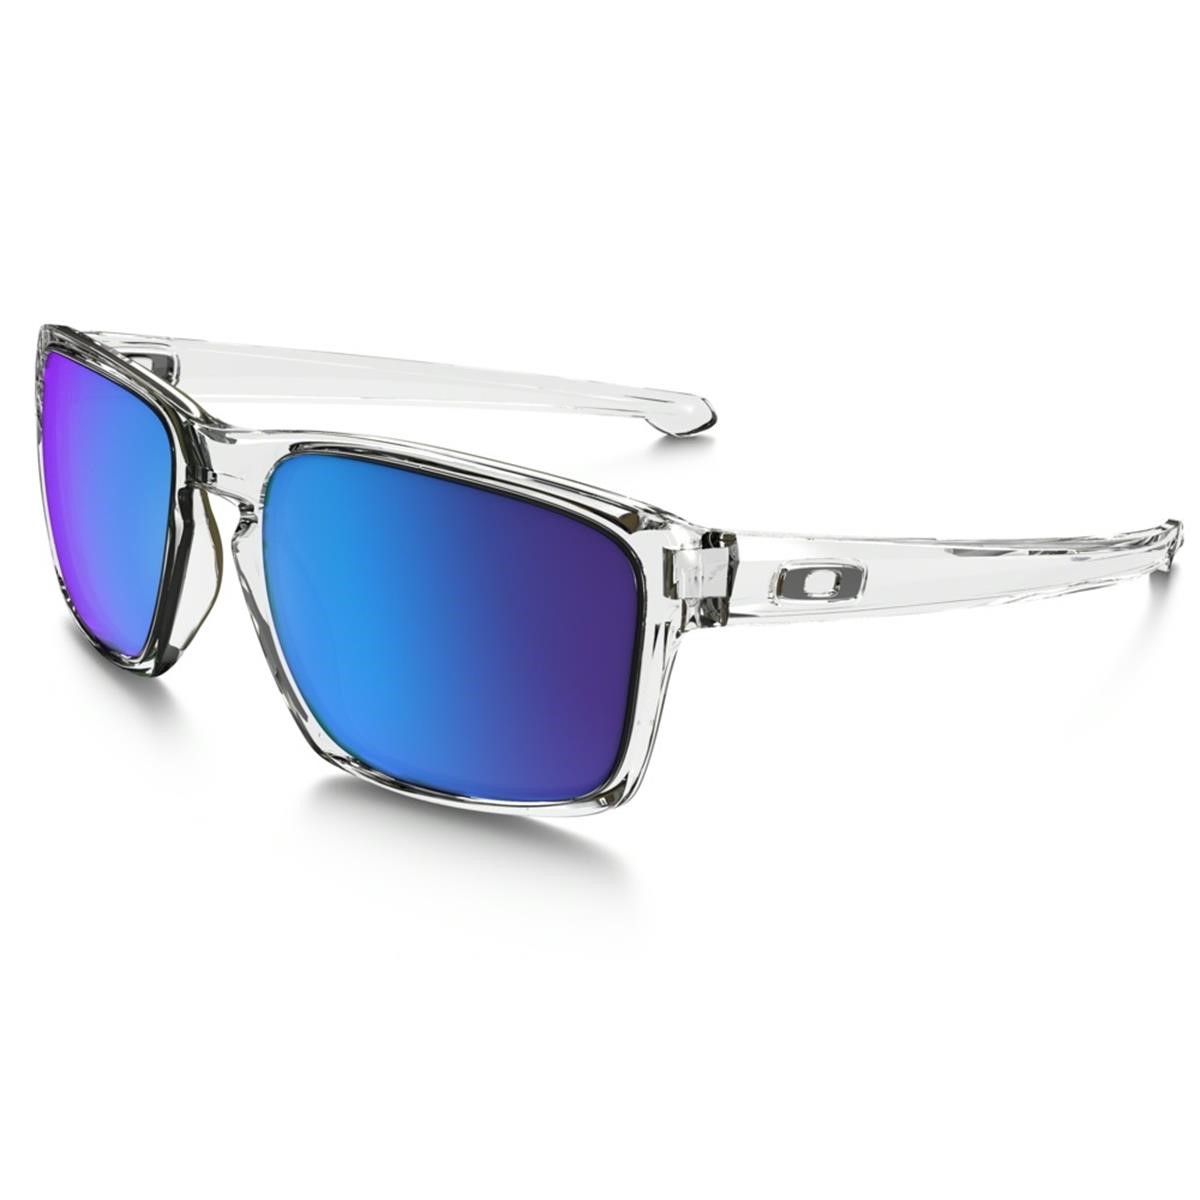 Oakley Sunglasses Silver Polished Clear/Sapphire Iridium